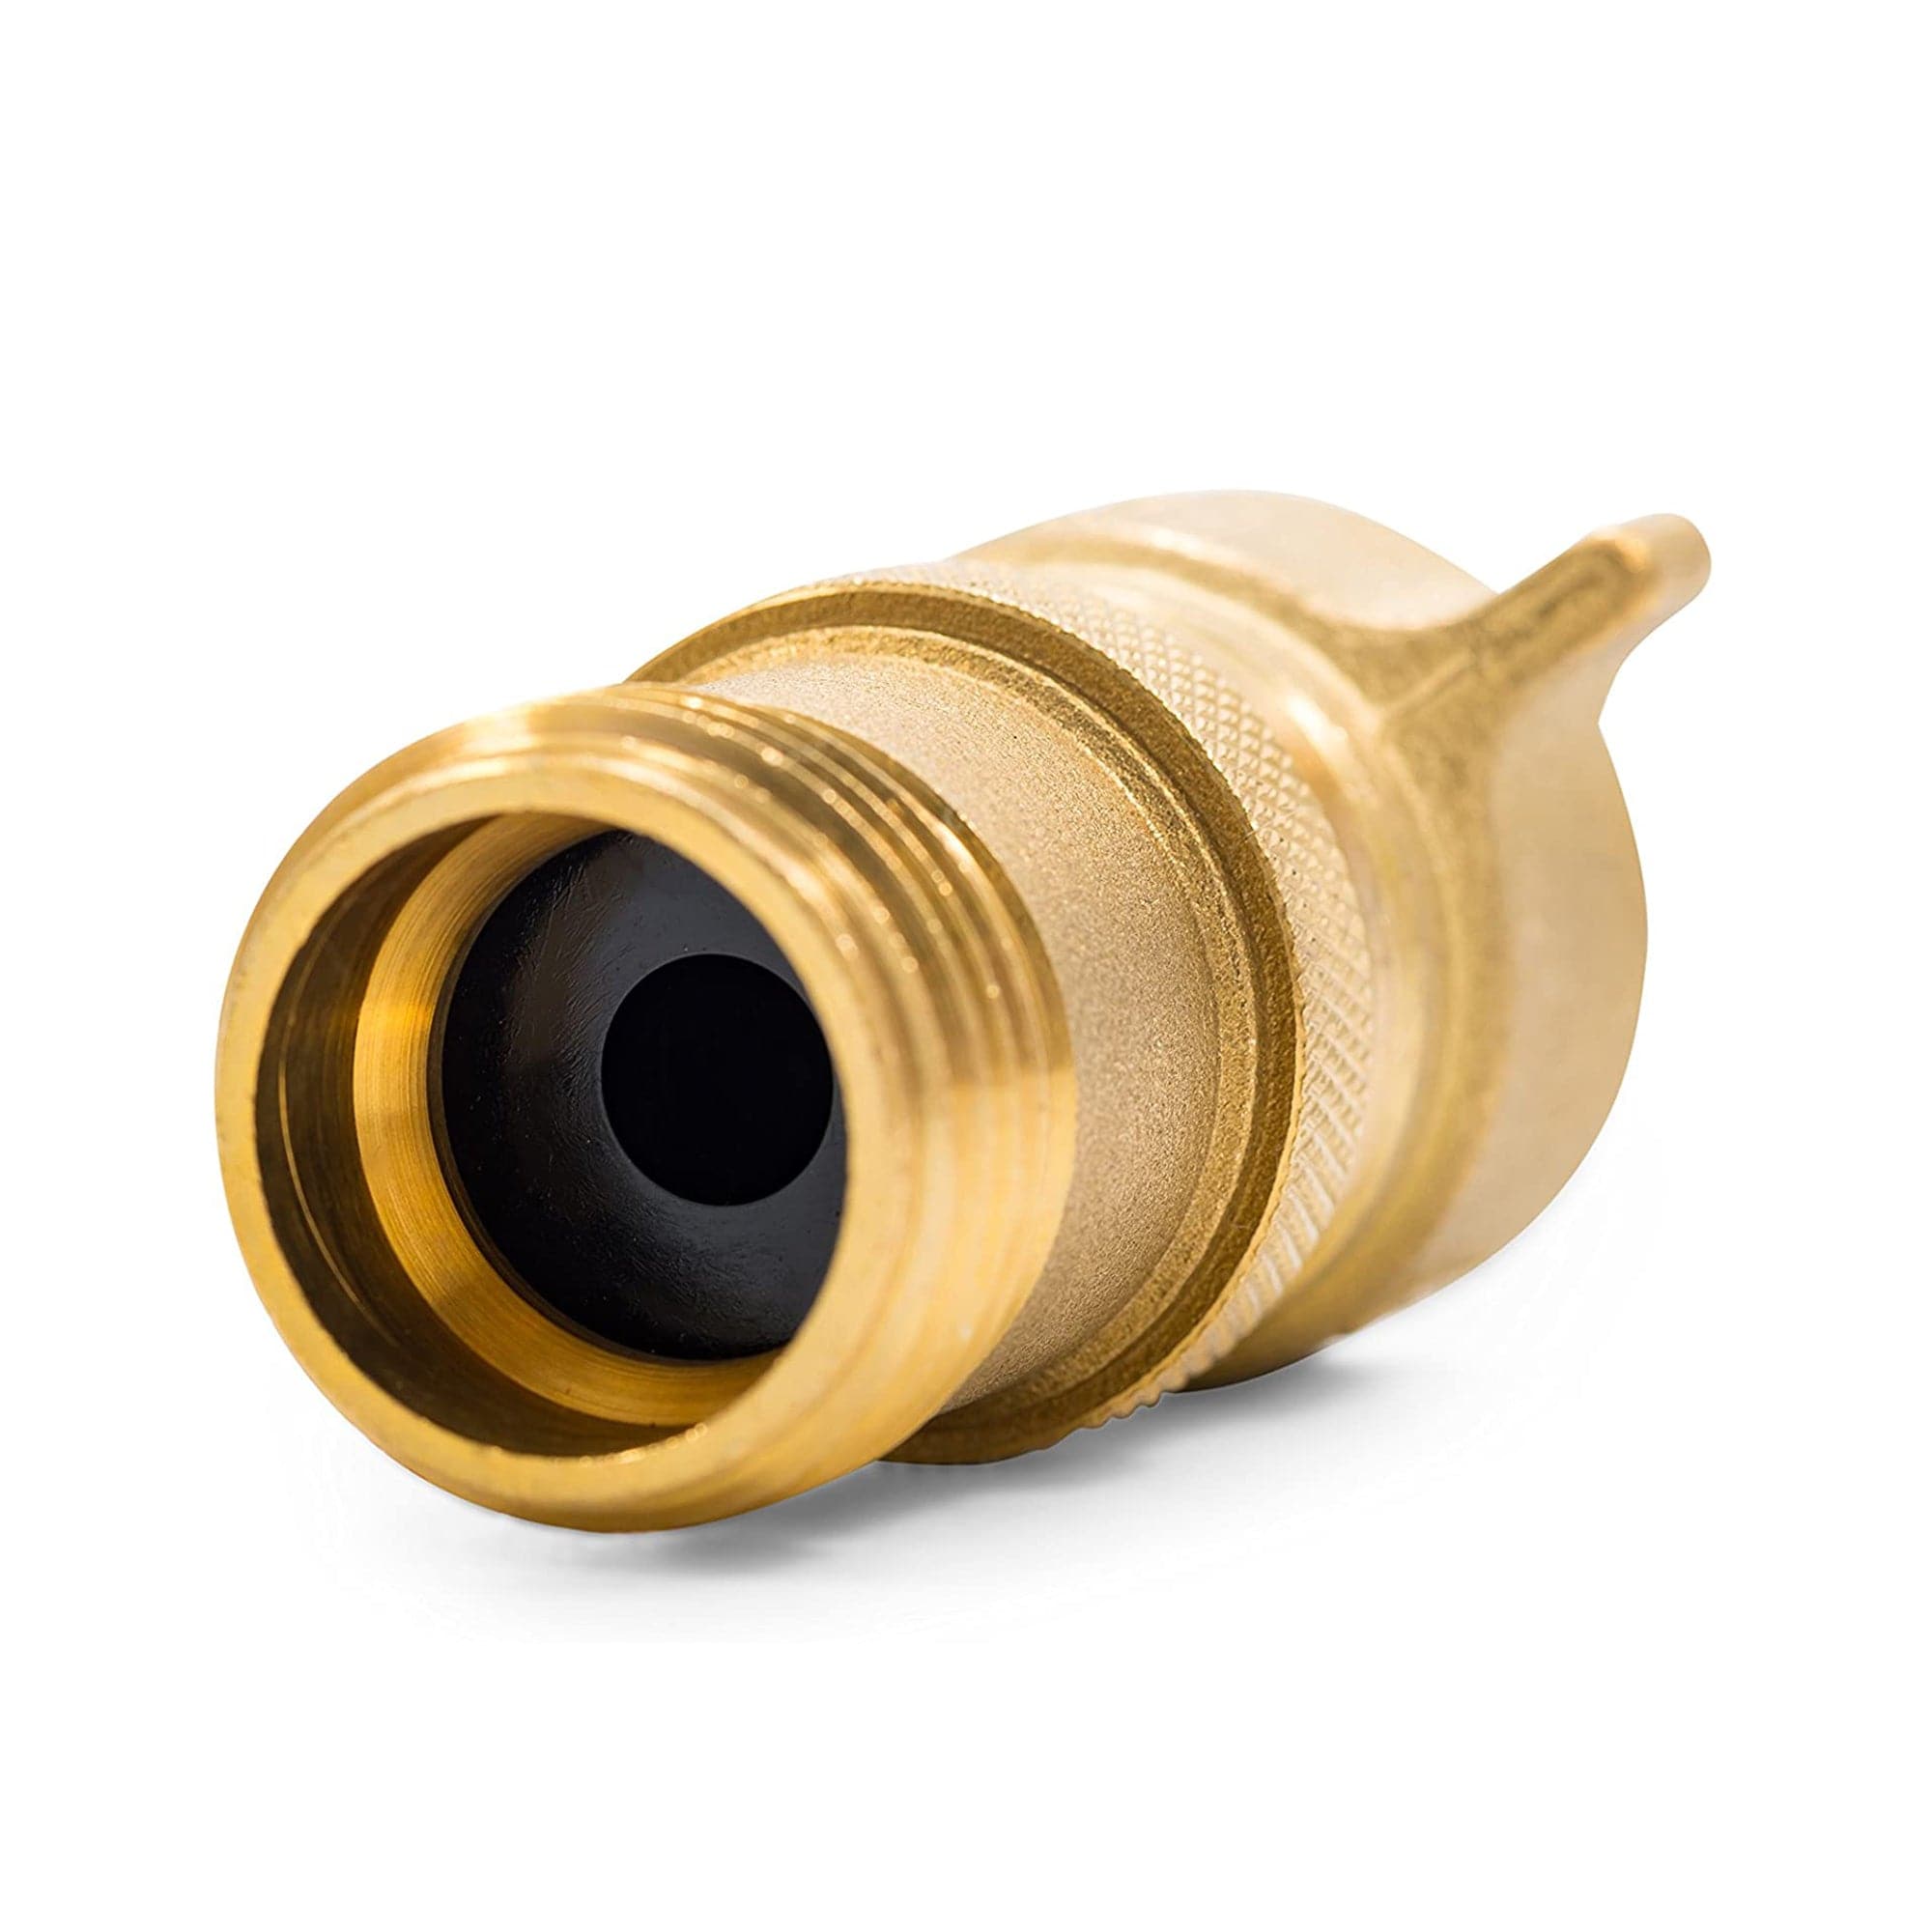 Camco 40055 Water Pressure Regulator - 3 / 4" Brass